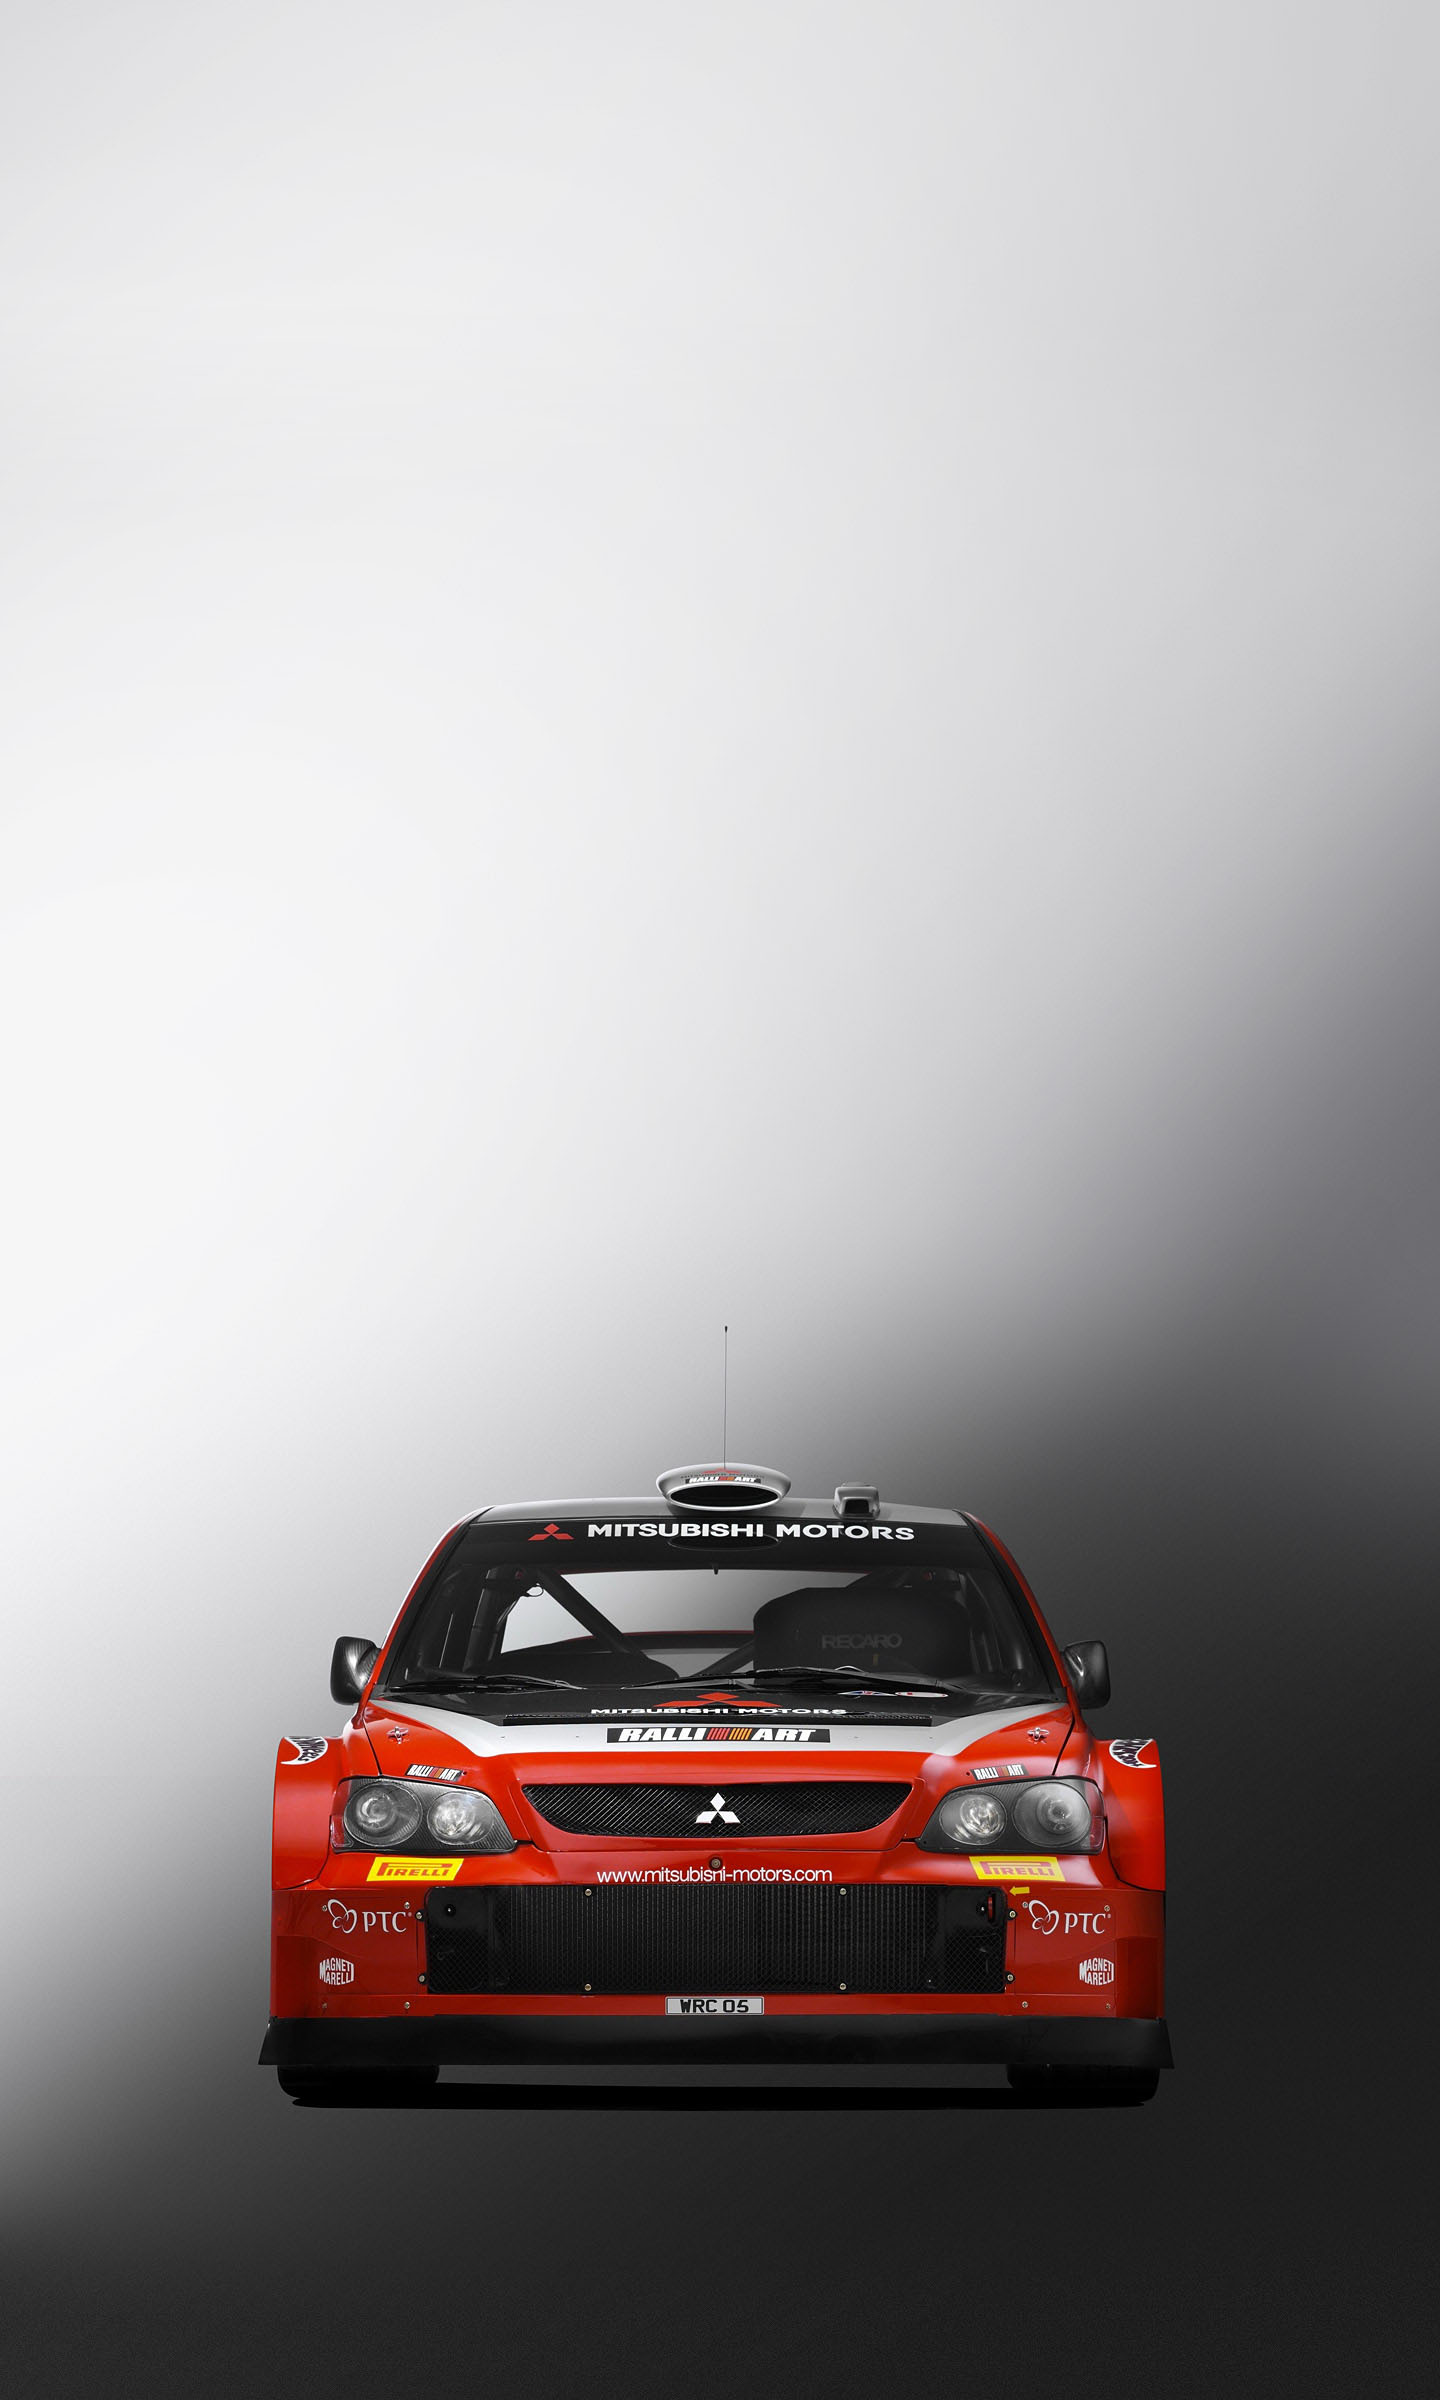  2005 Mitsubishi Lancer WRC05 Wallpaper.